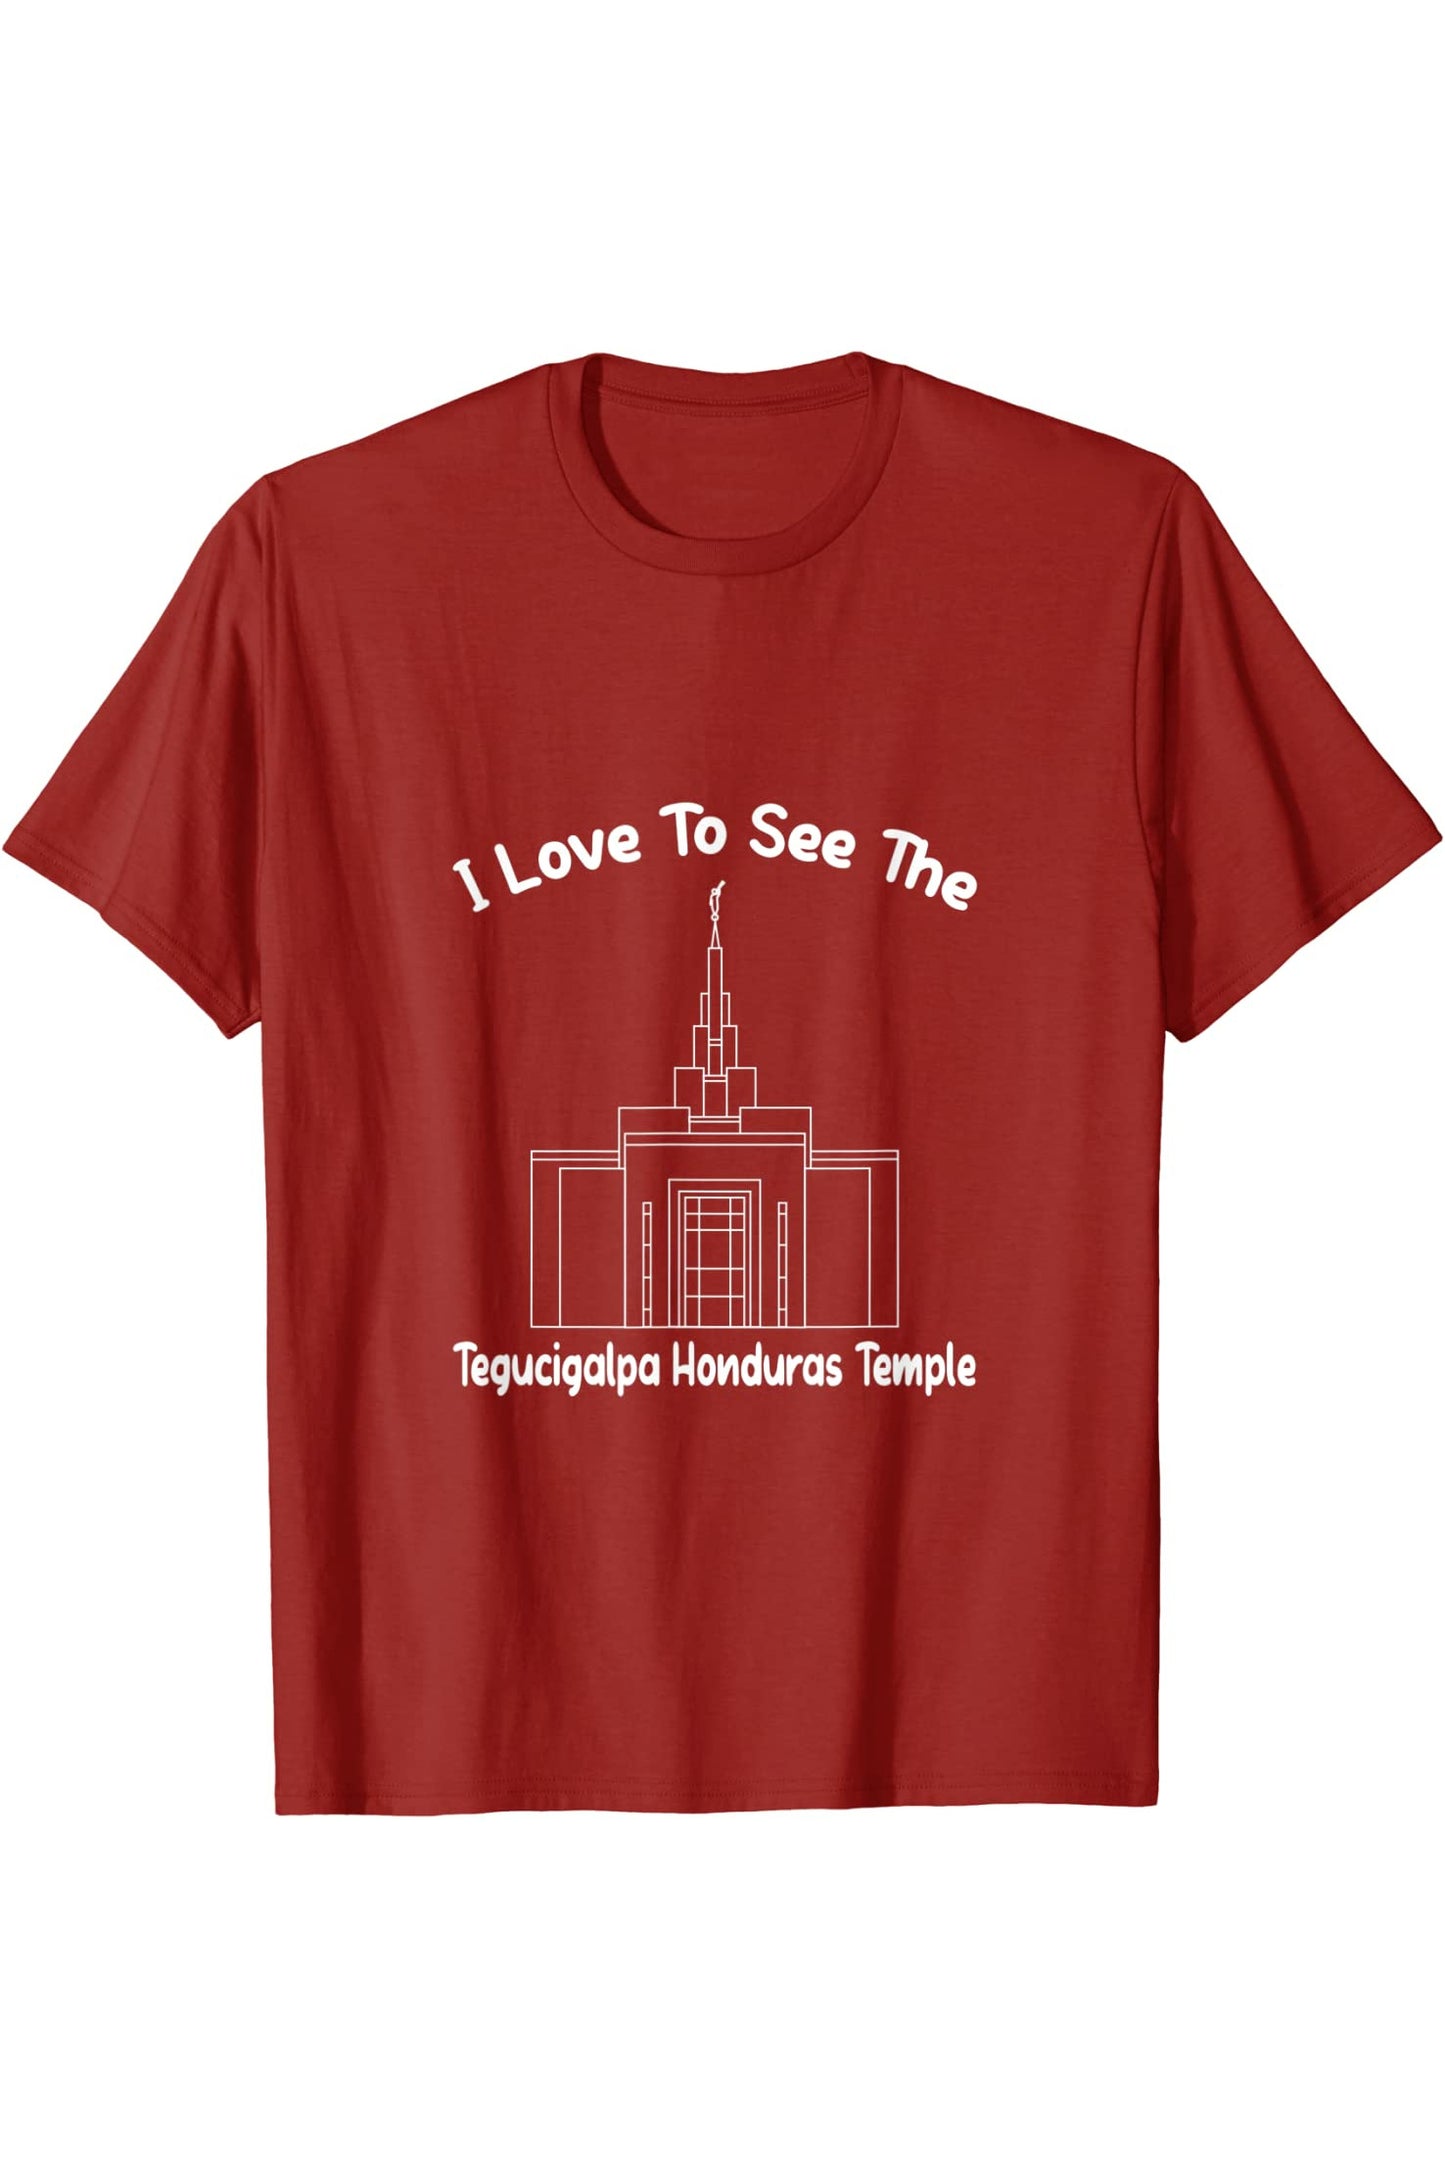 Tegucigalpa Honduras Temple T-Shirt - Primary Style (English) US